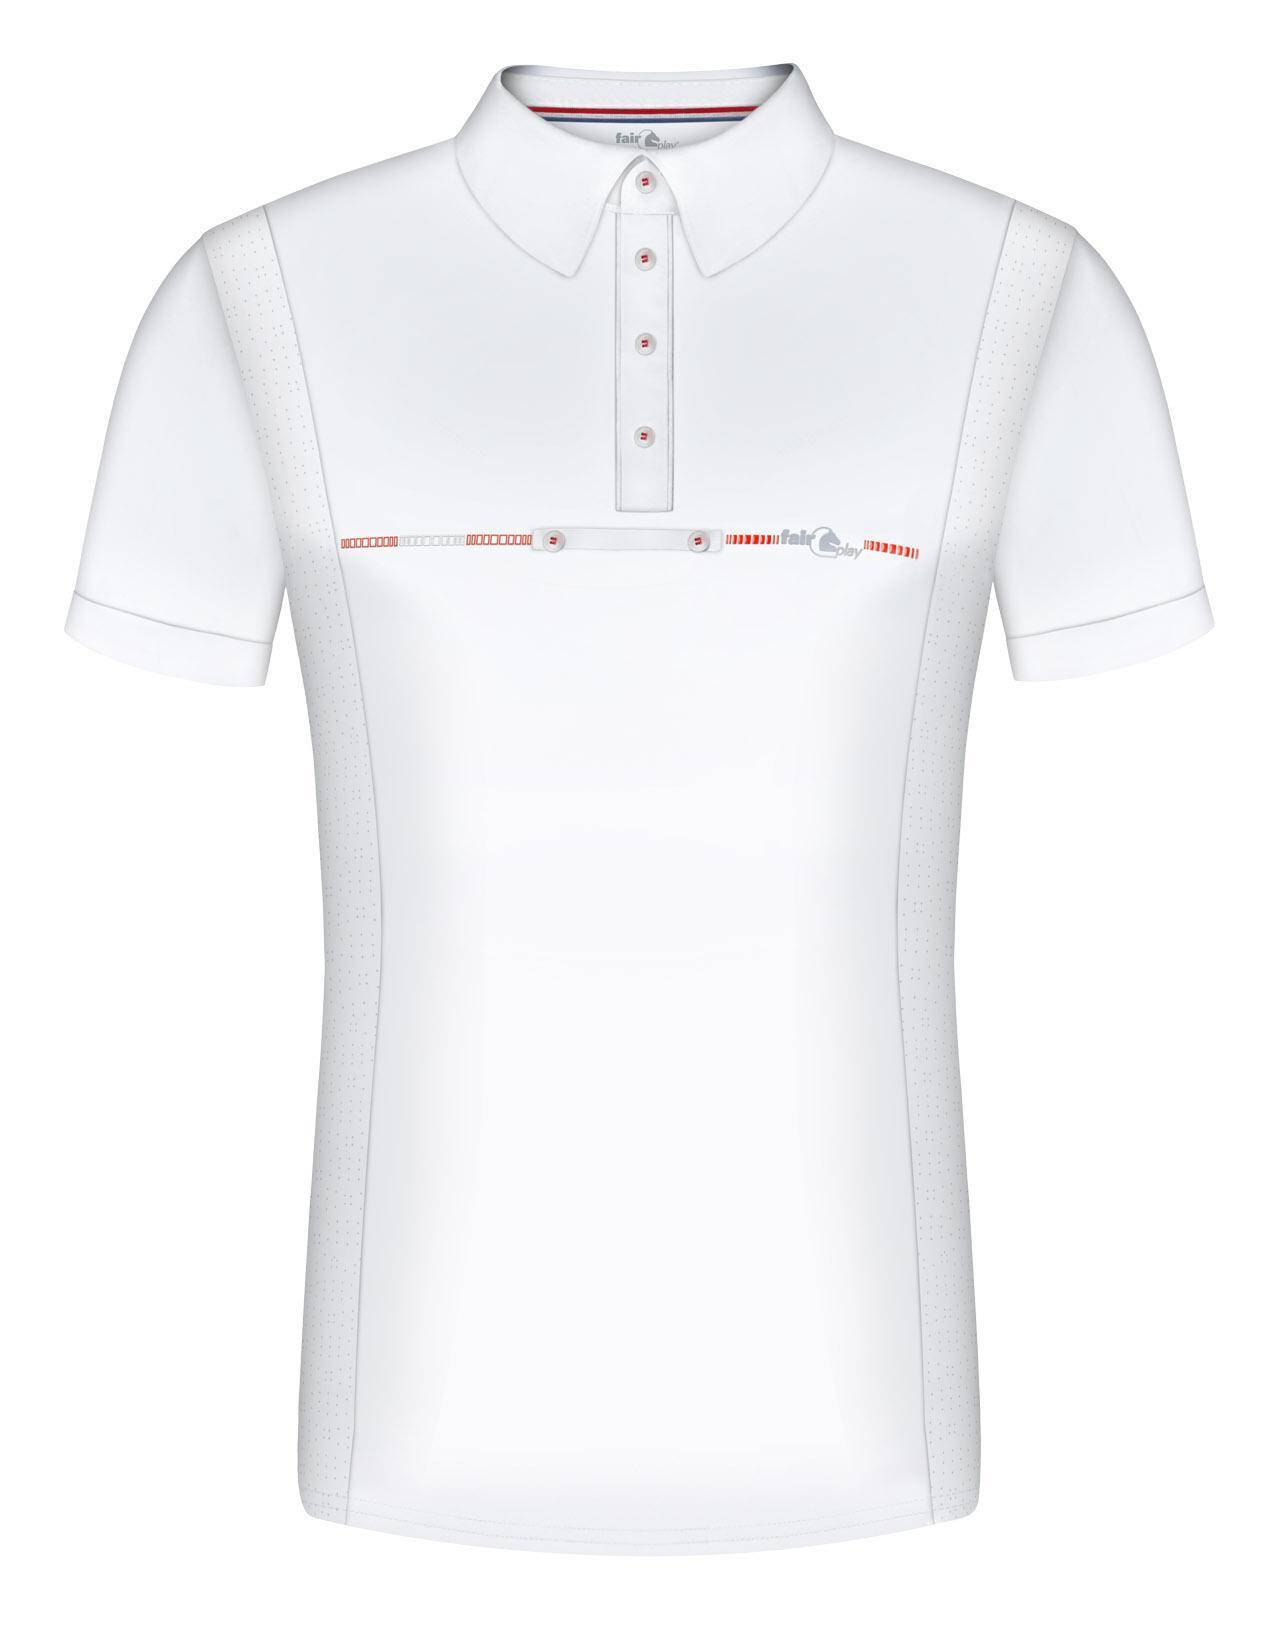 Koszulka konkursowa FP DAVID biały  48